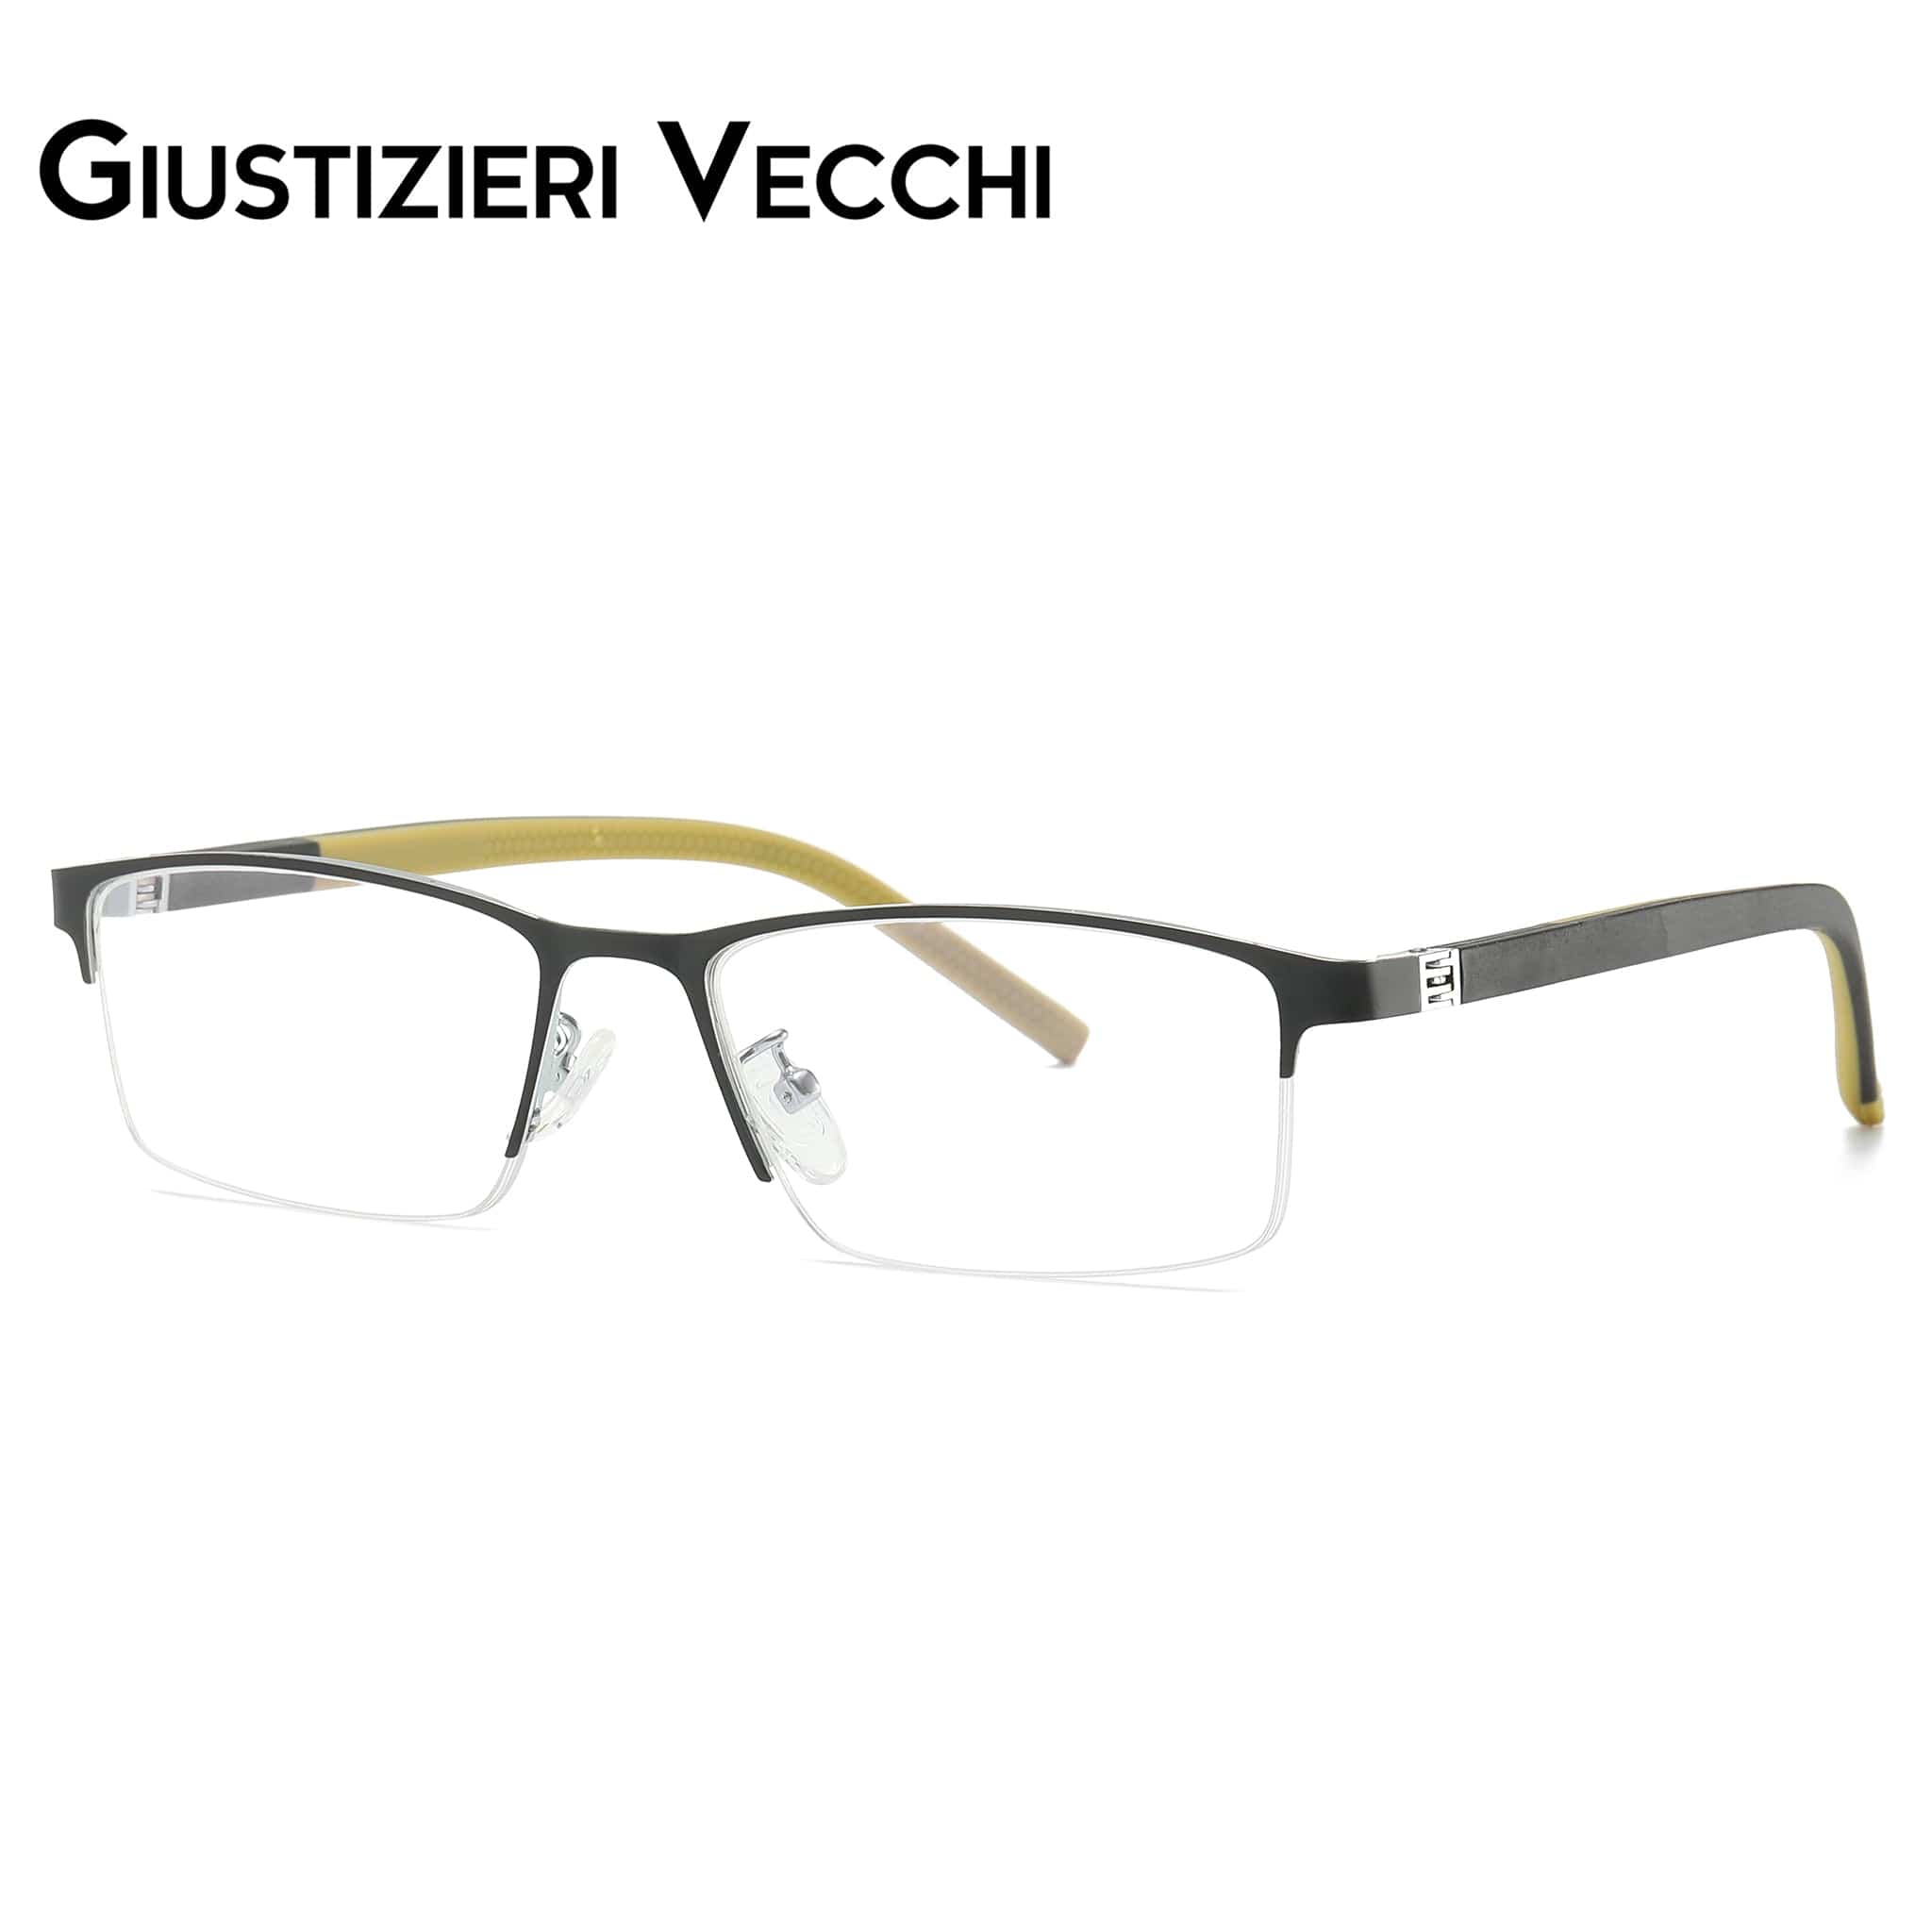 GIUSTIZIERI VECCHI Eyeglasses HydroFlash Duo